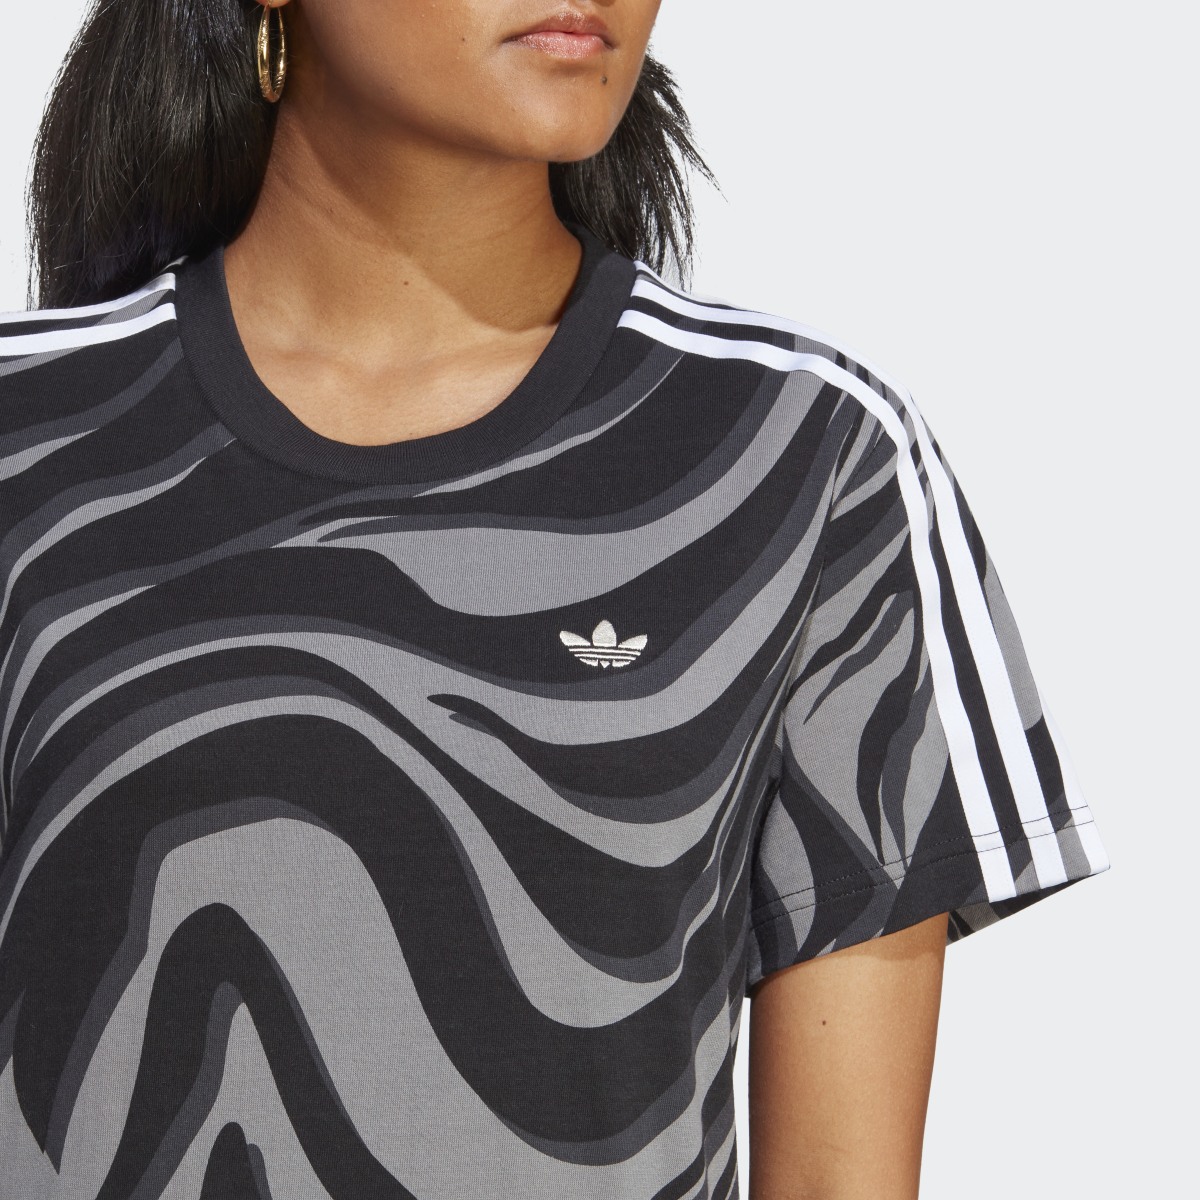 Adidas Camiseta Abstract Allover Animal Print. 6